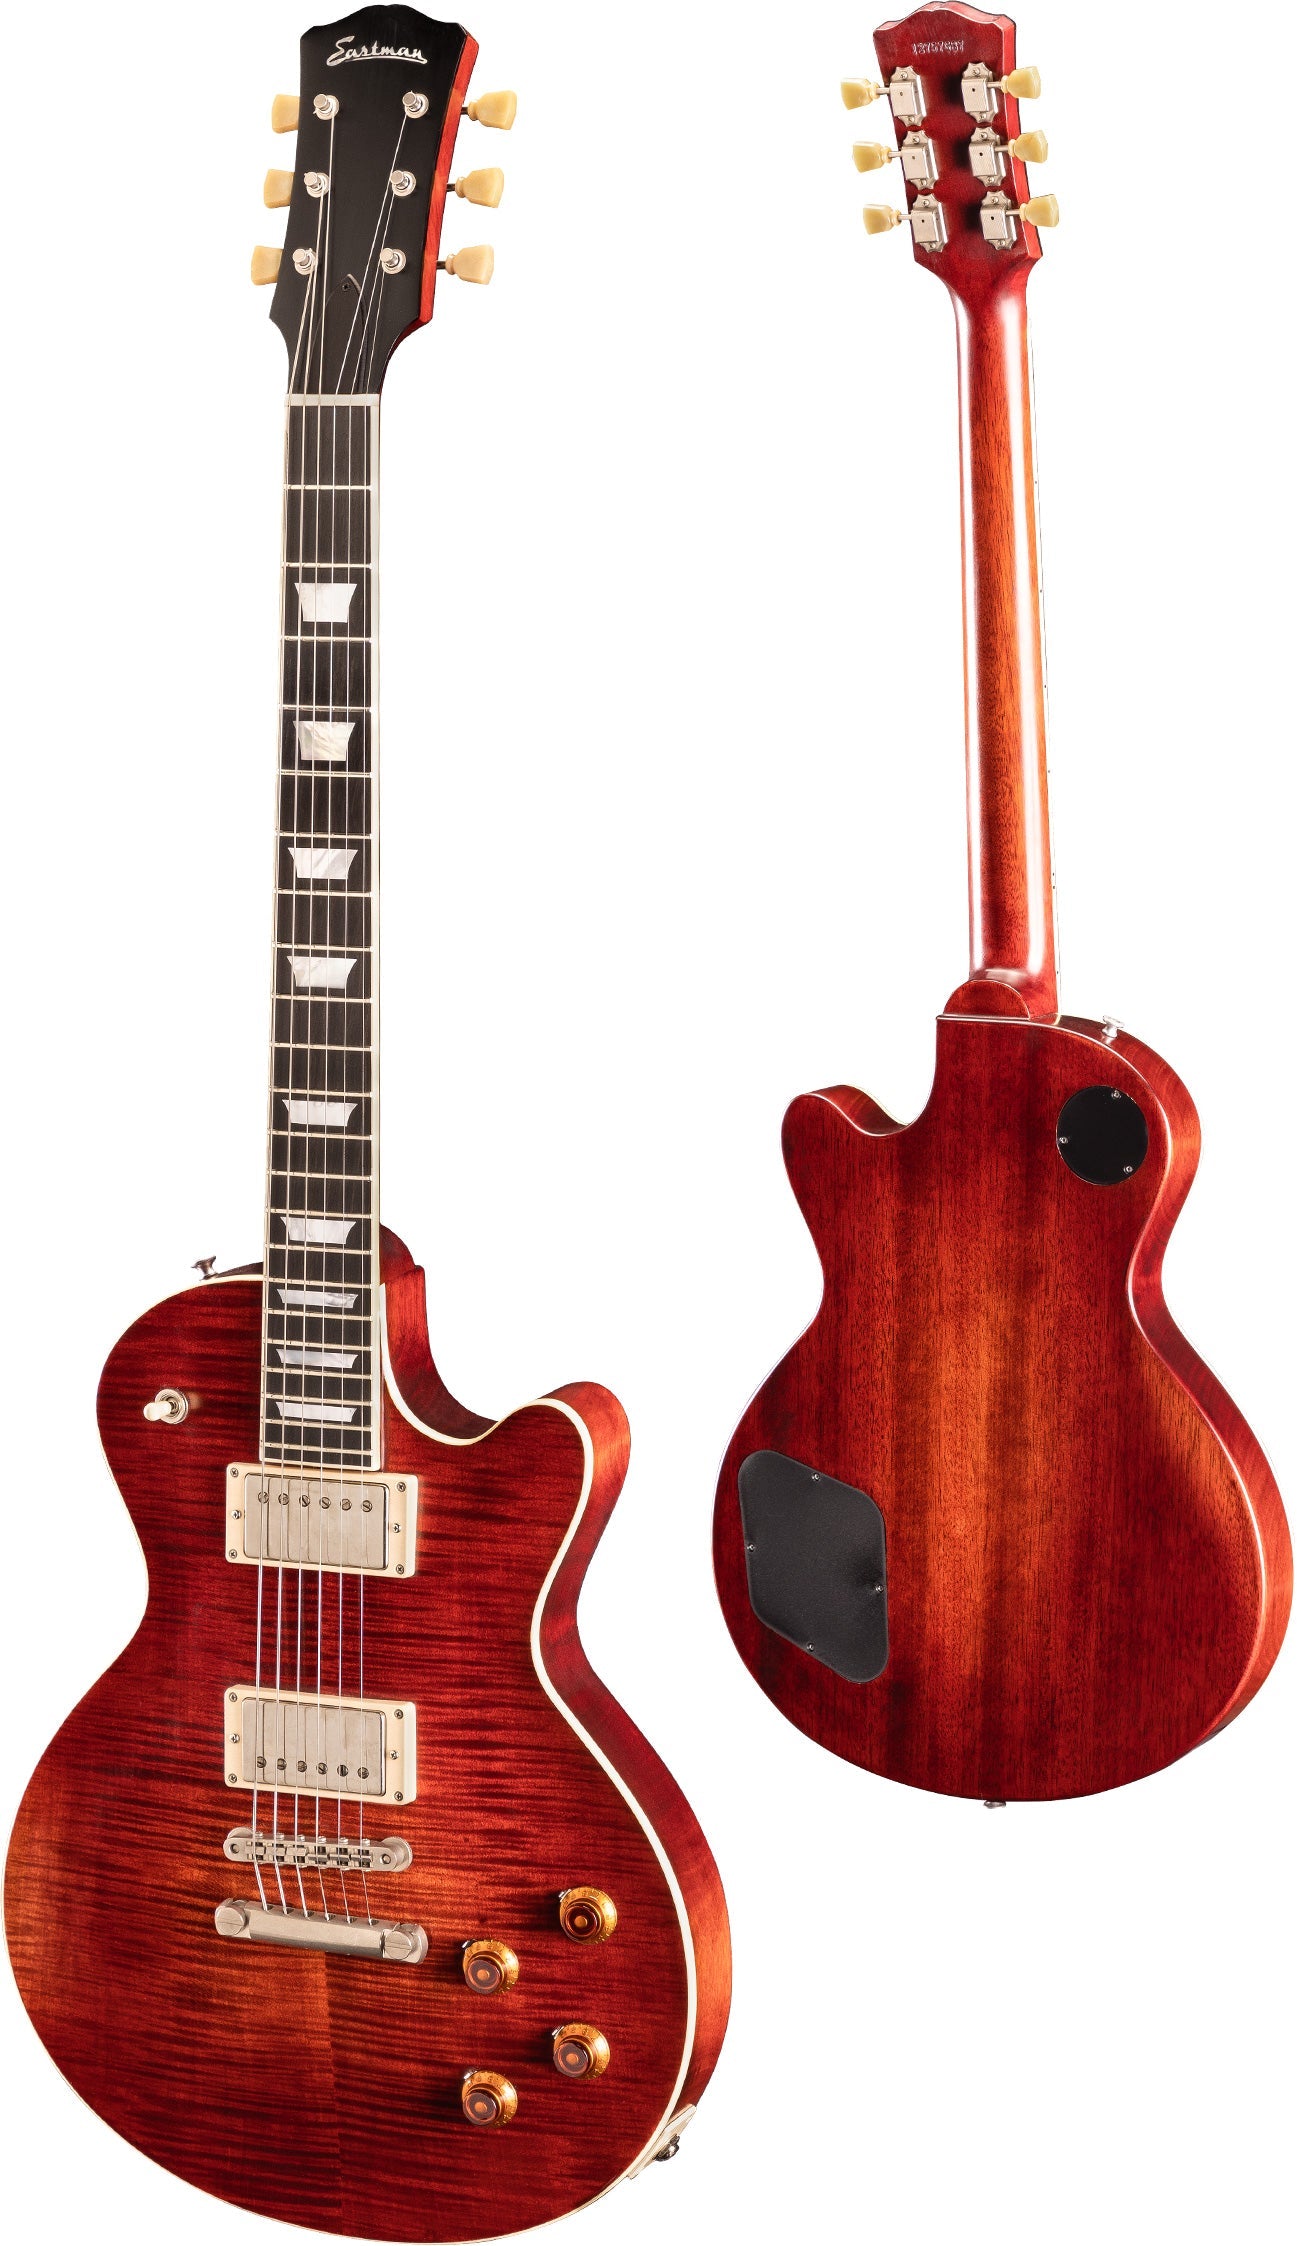 Eastman SB59/TV, Electric Guitar for sale at Richards Guitars.